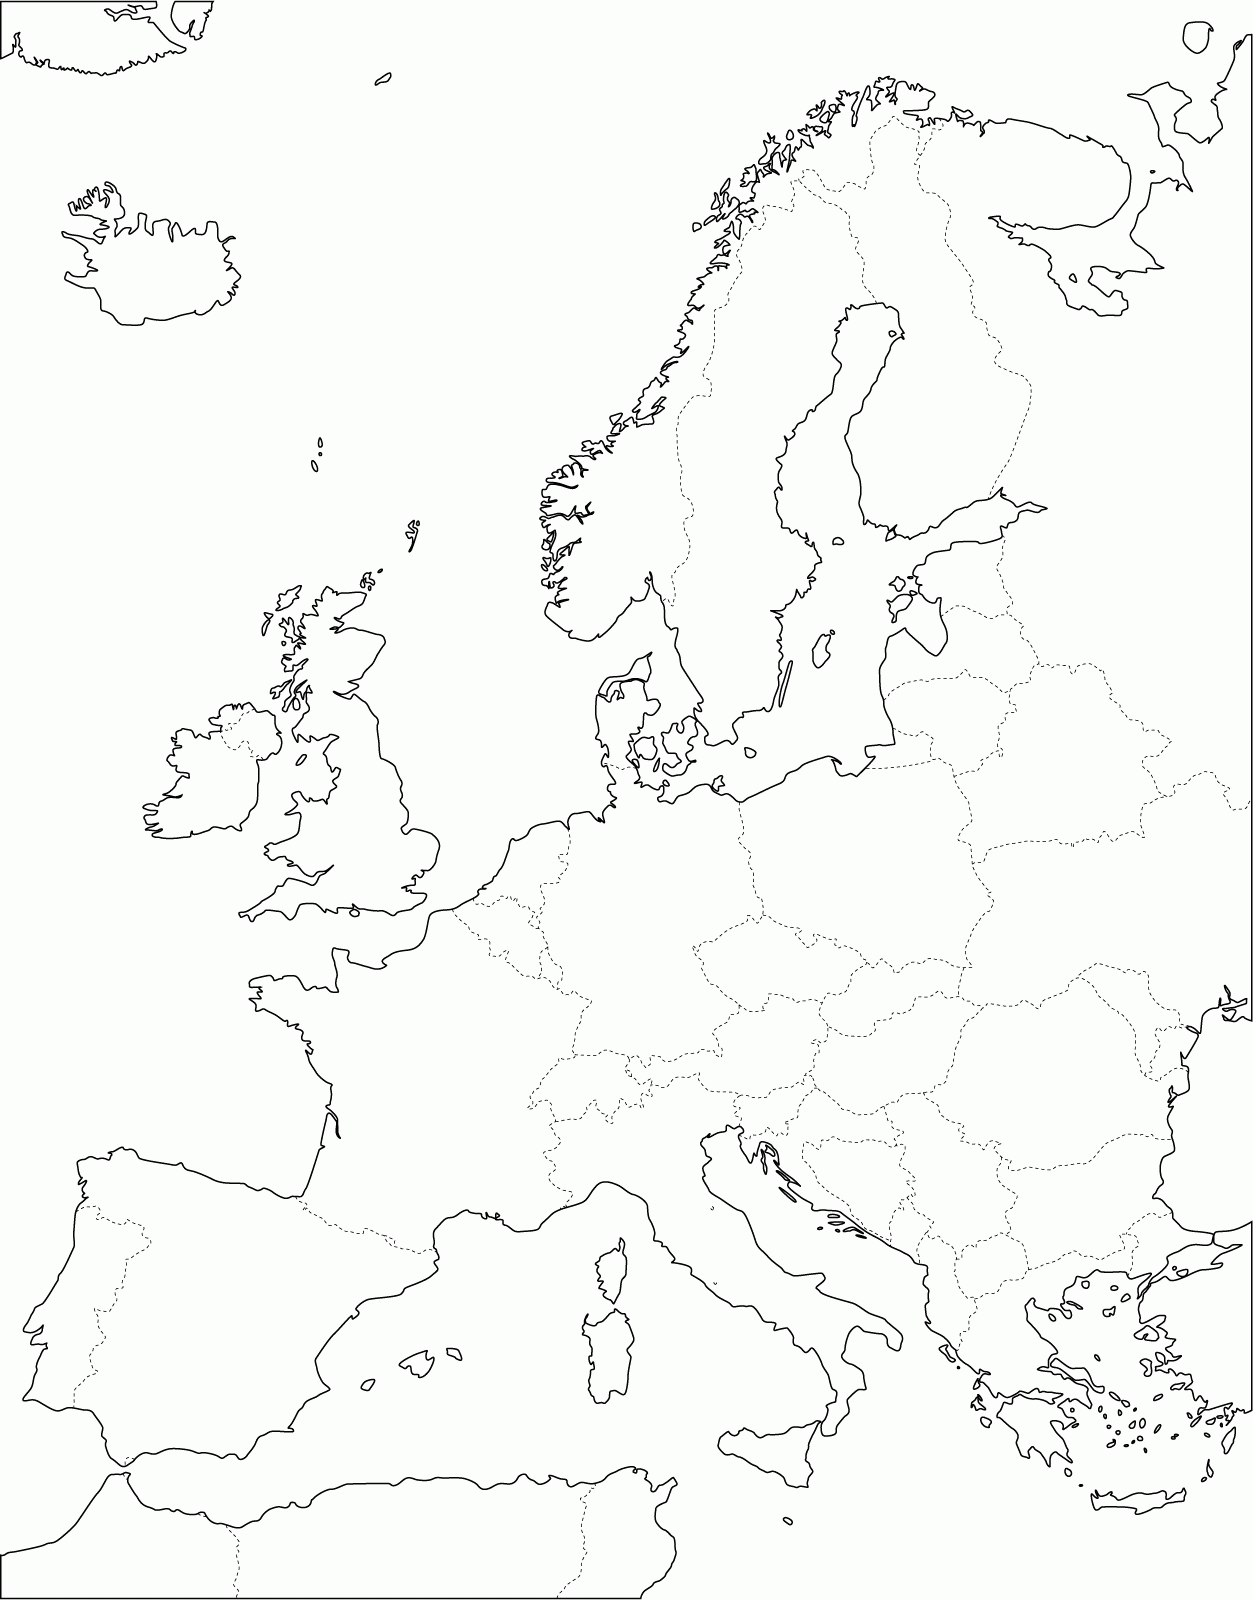 Grande Carte D&amp;#039;europe Vierge Et Blanche À Compléter | Carte intérieur Carte Europe Vierge Cm1 